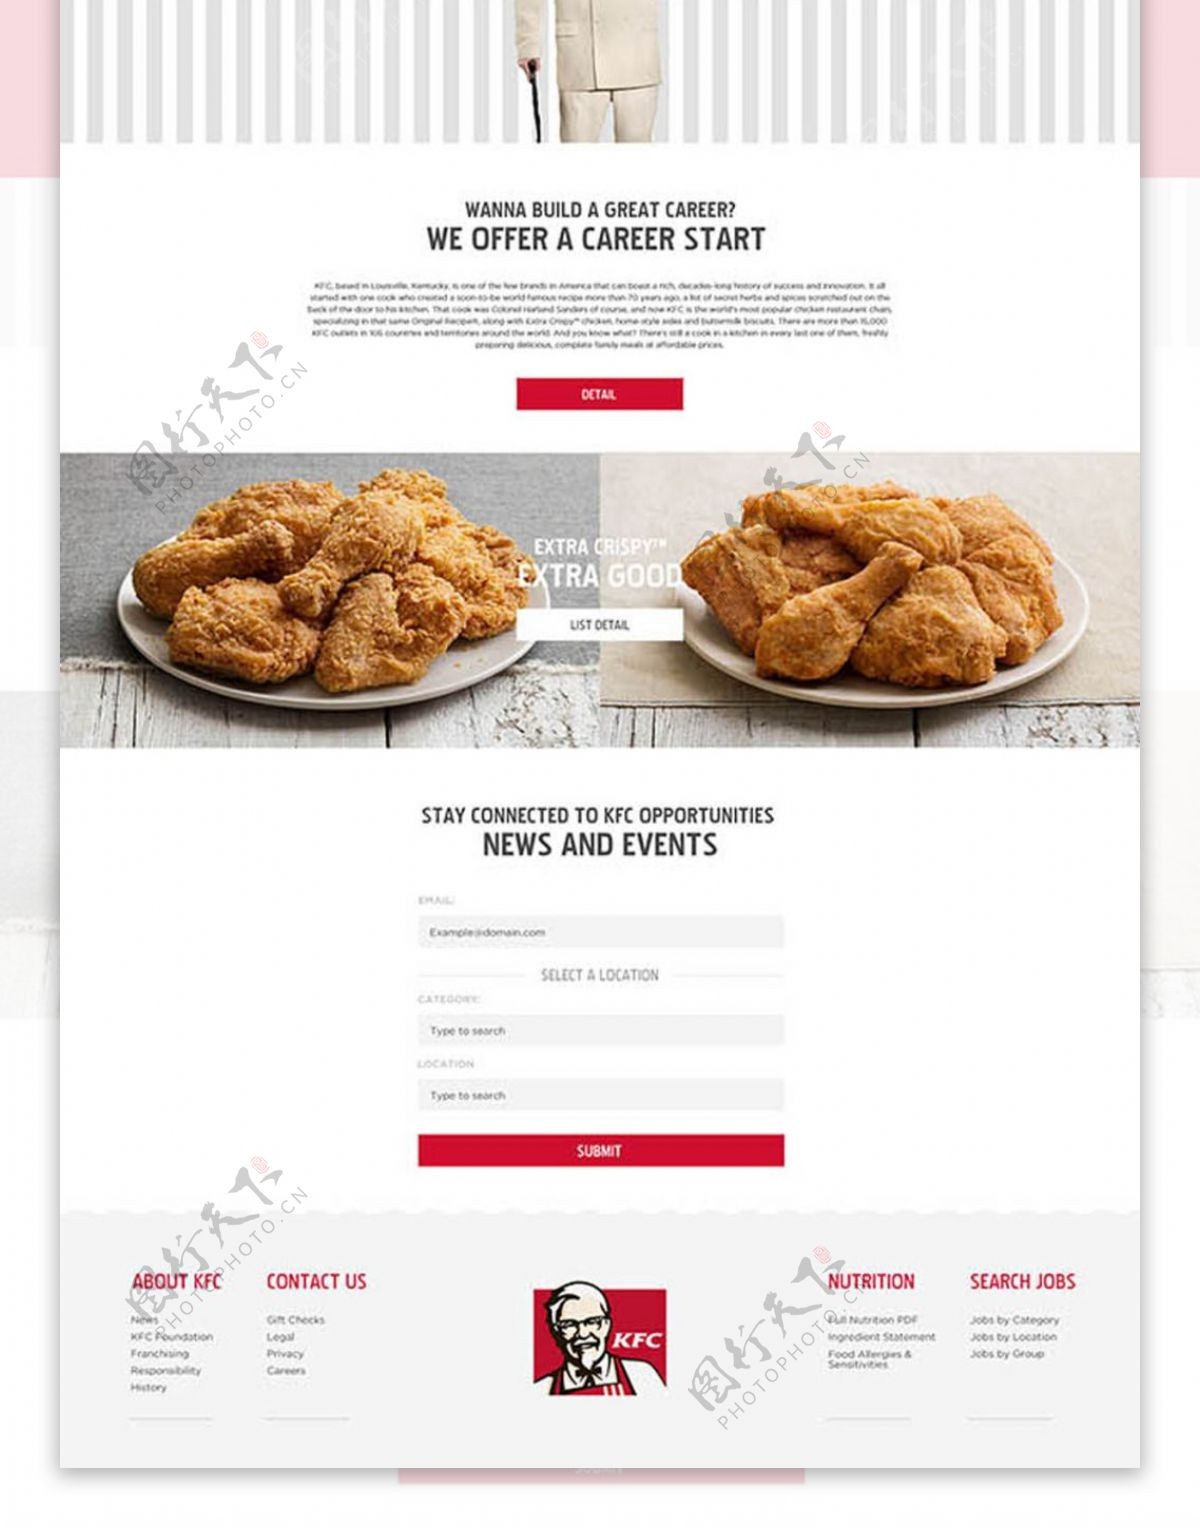 KFC肯德基英文网站网页设计模板